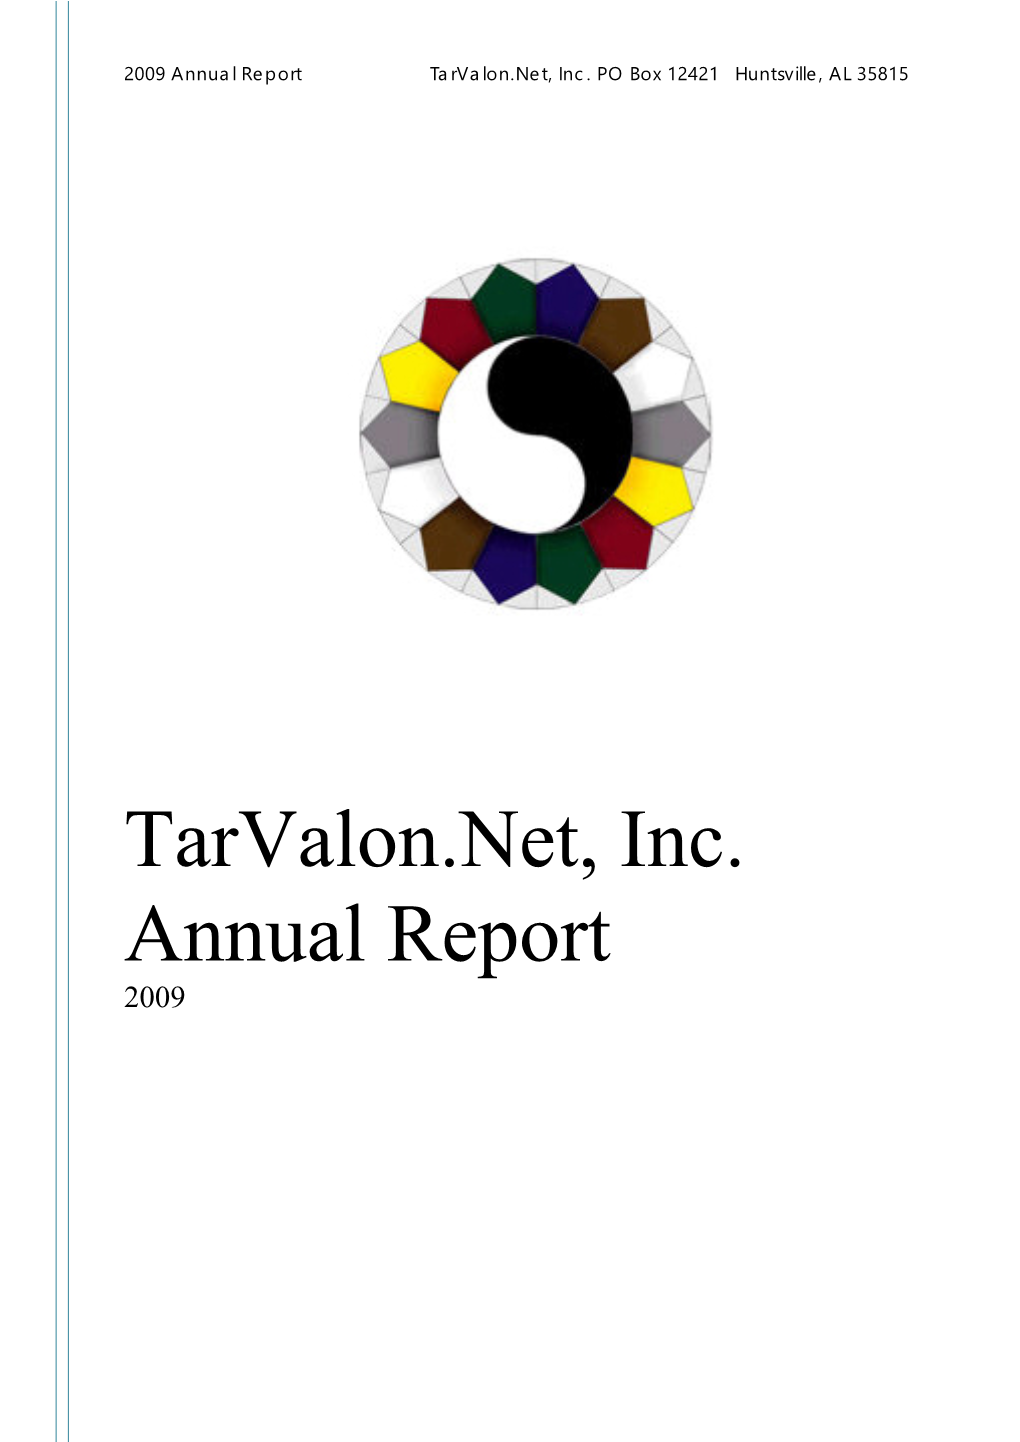 Tarvalon.Net Annual Report